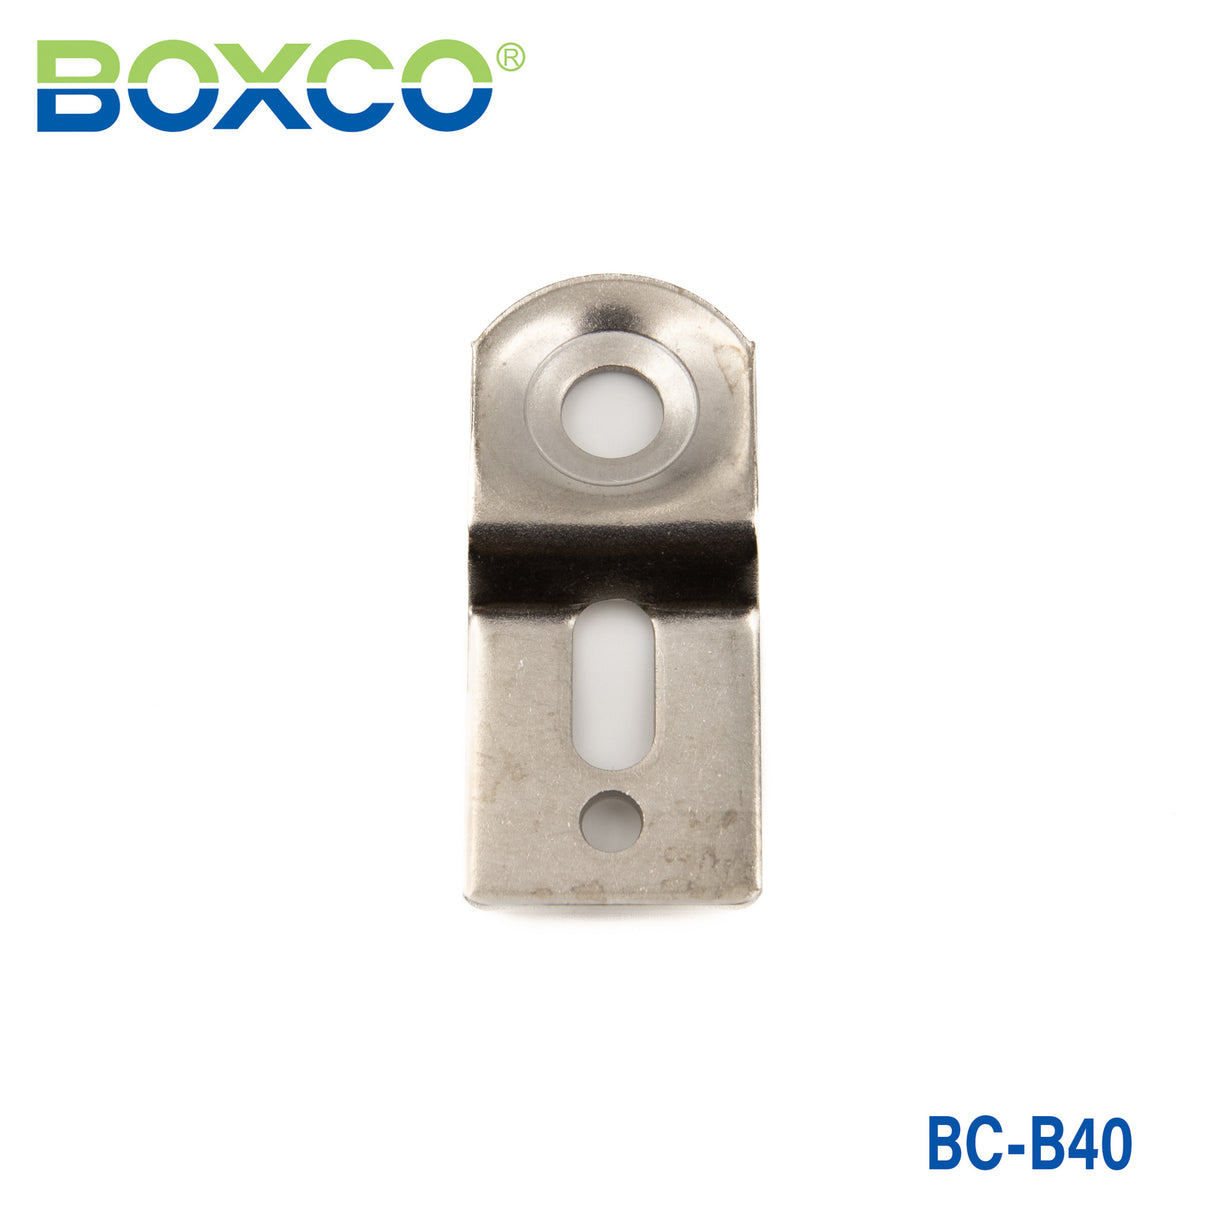 Boxco Mounting Bracket BC-B40